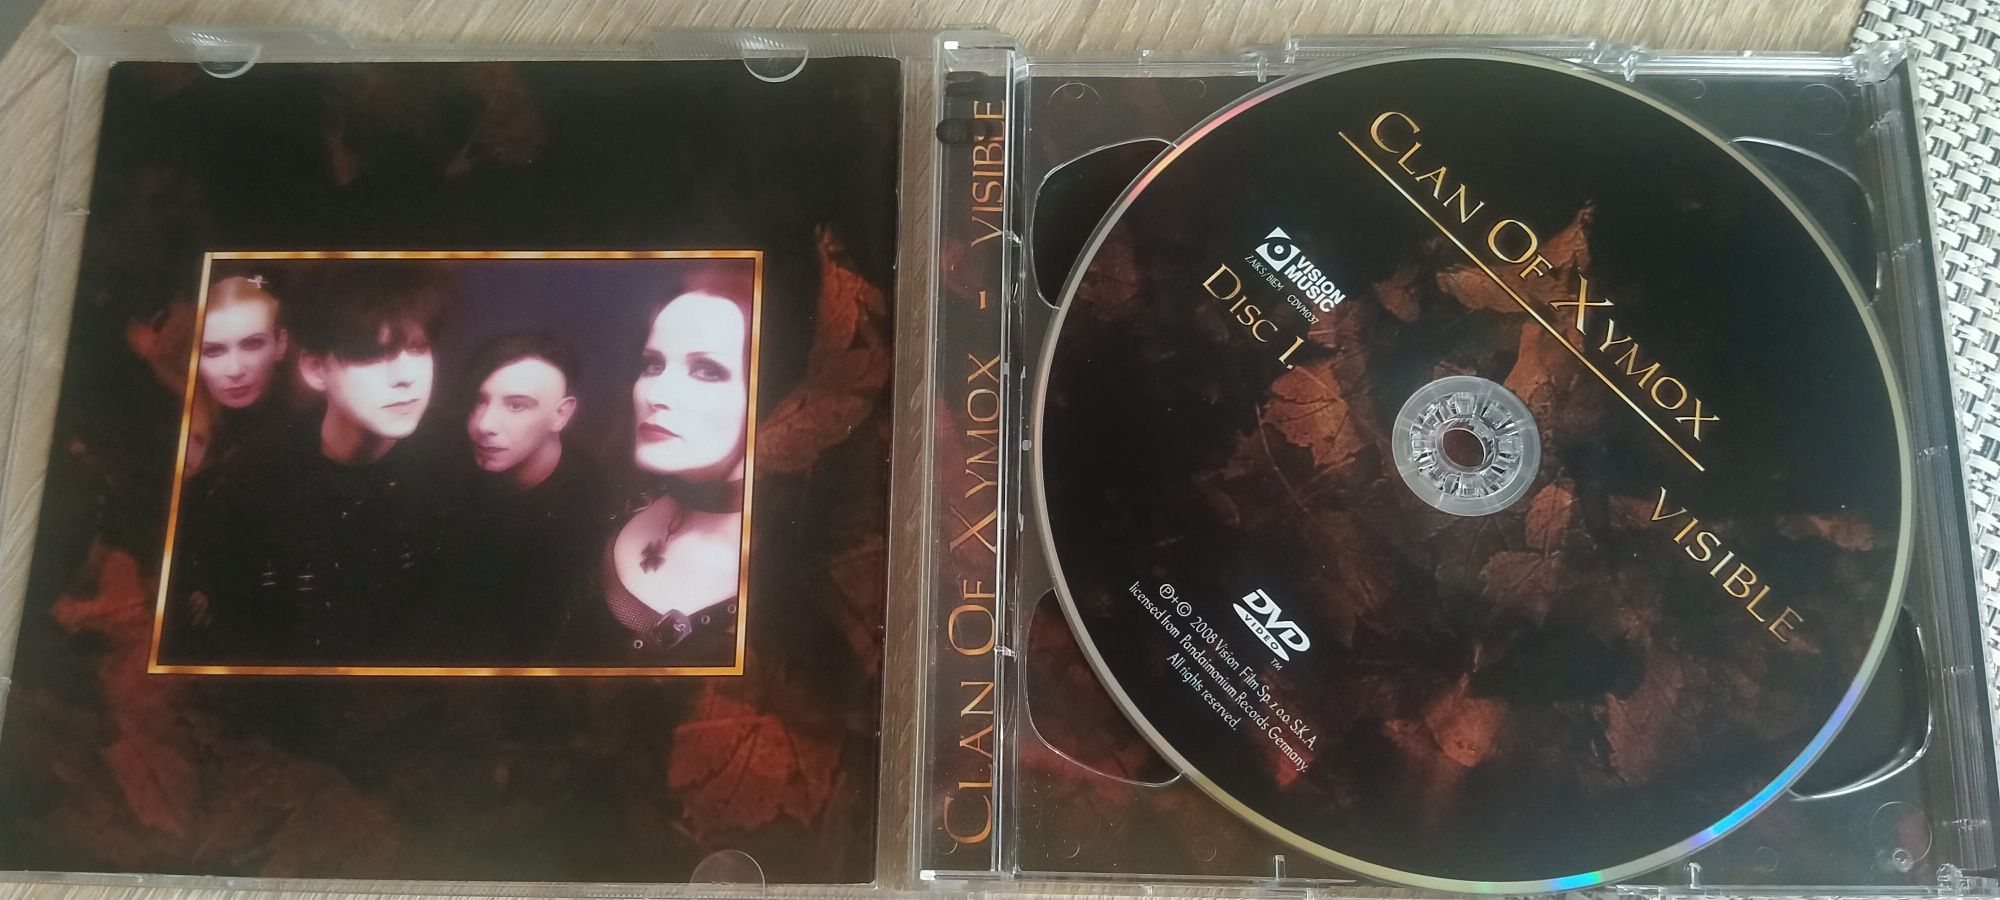 Płyta DVD Clan od xymox visible